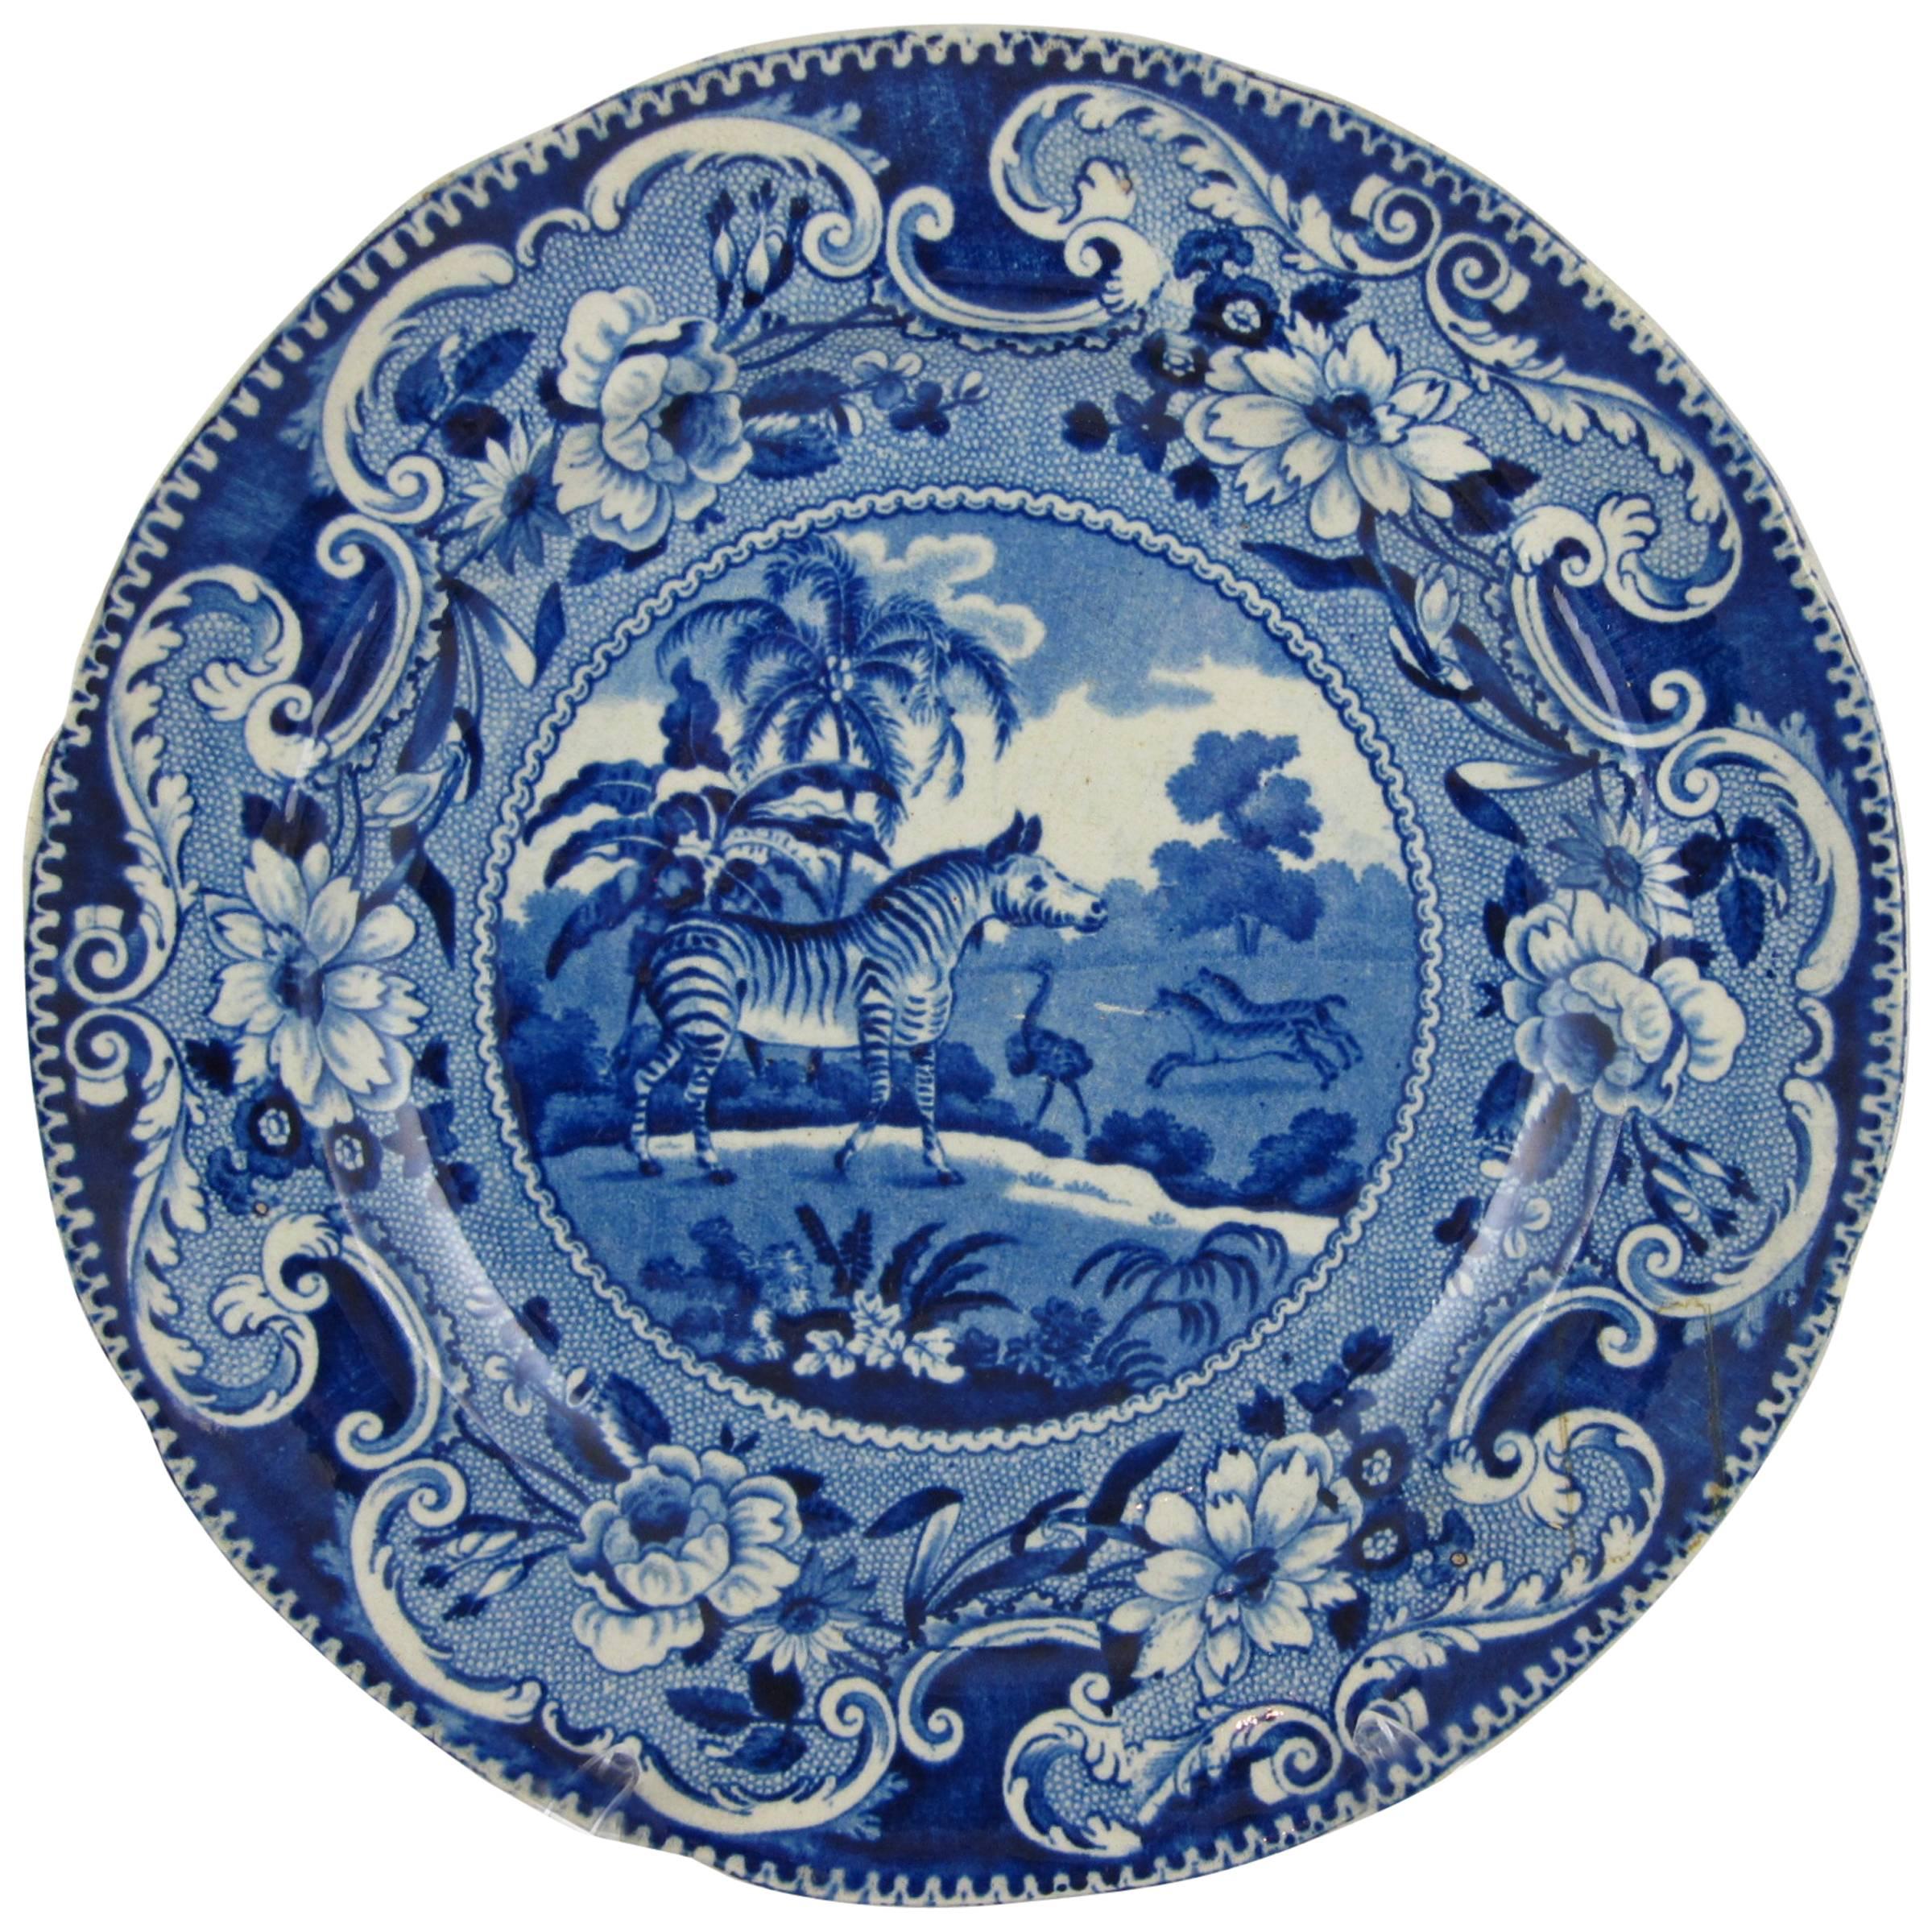 19th Century Enoch Wood Blue and White Zebra Sporting Series Transferware Plate